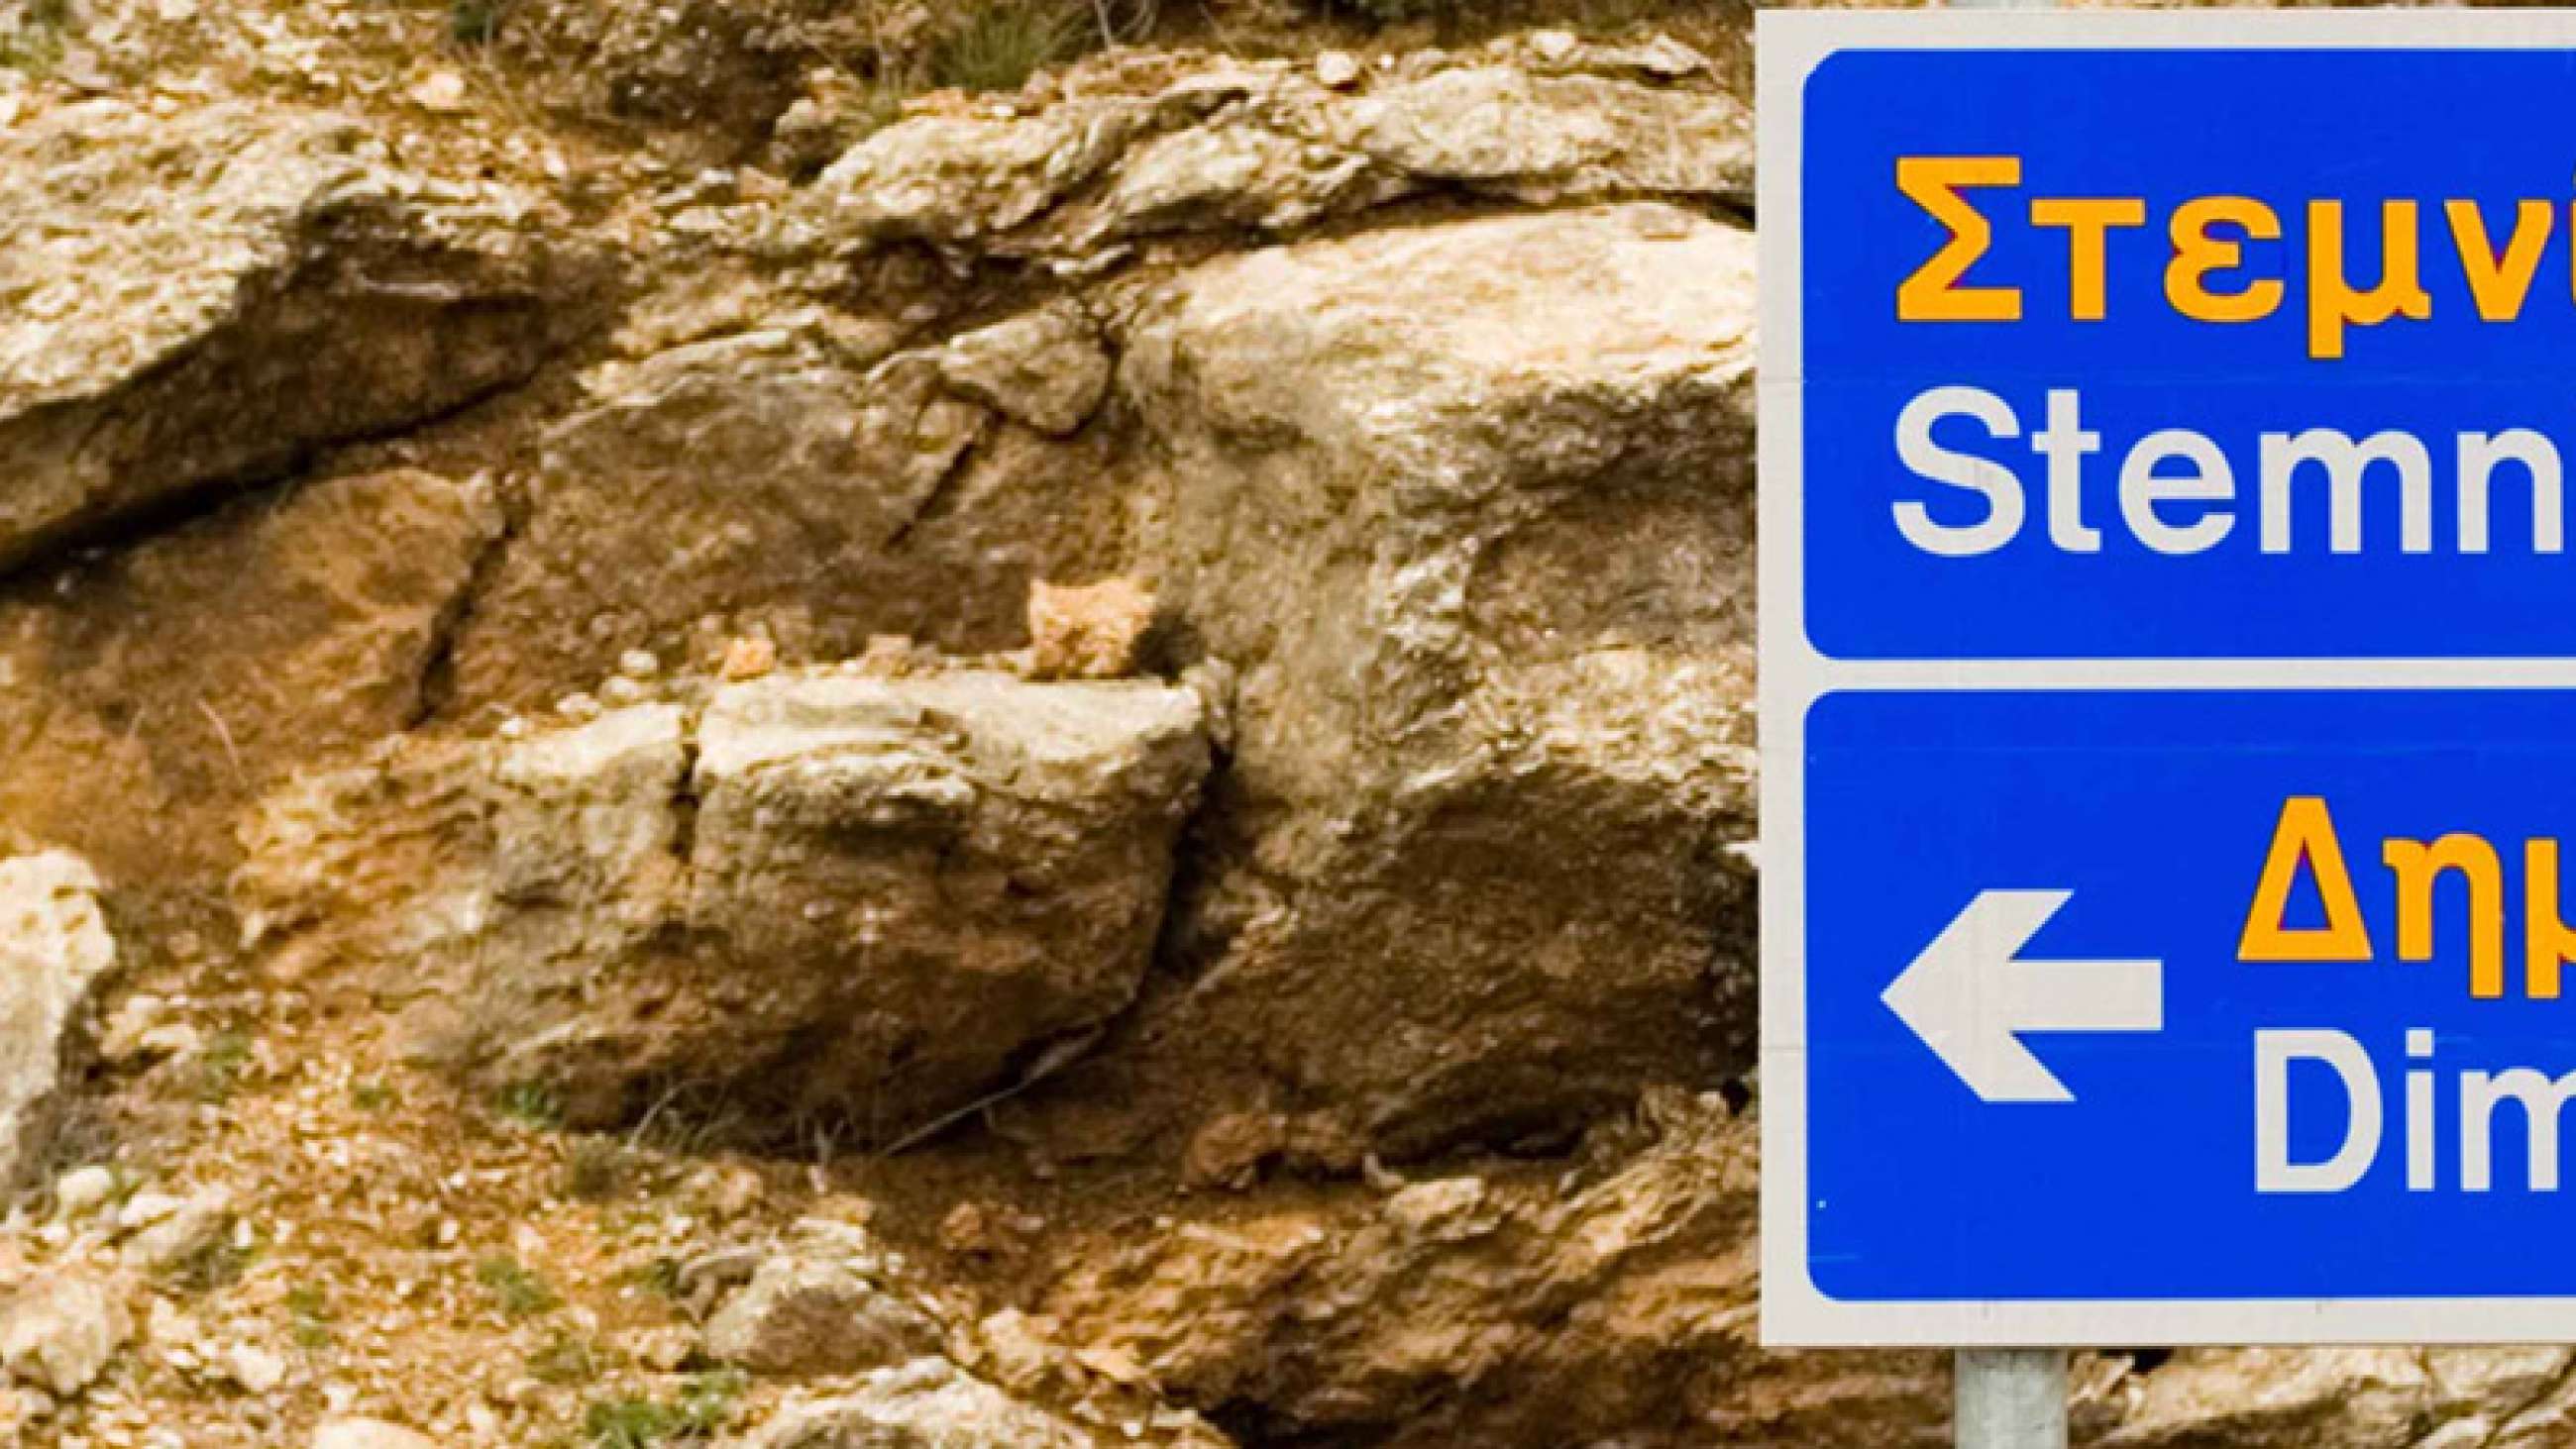 Greek destination signs